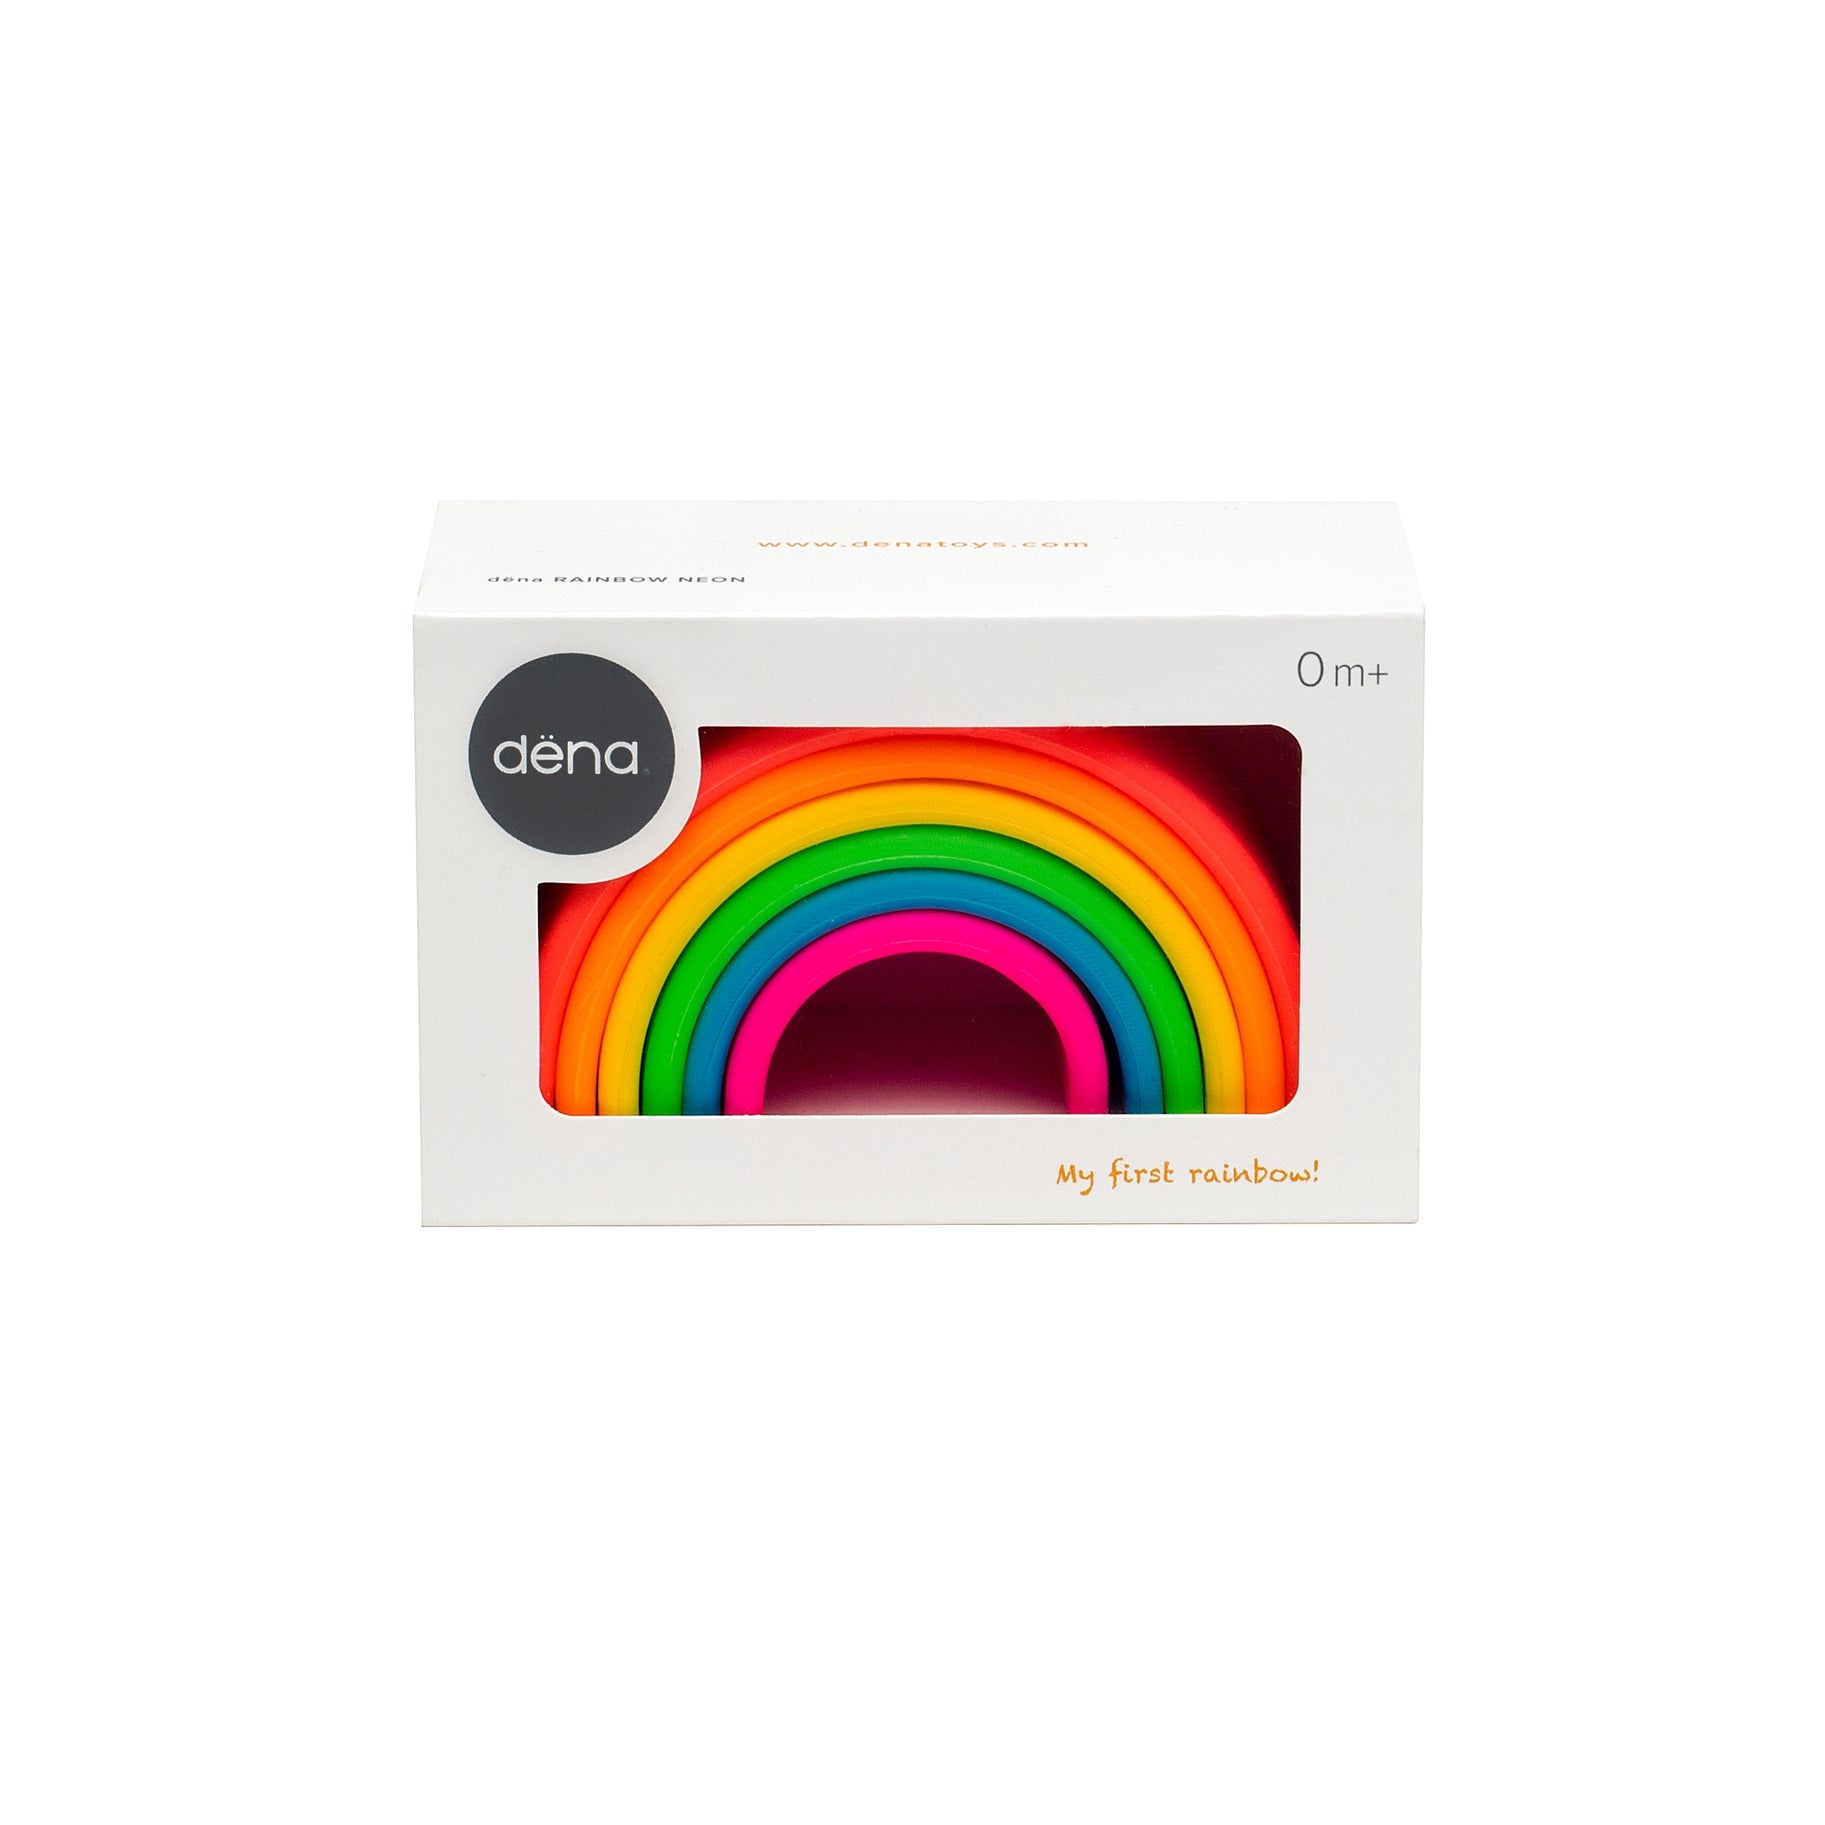 Neon Silicone Rainbow - 6 Piece